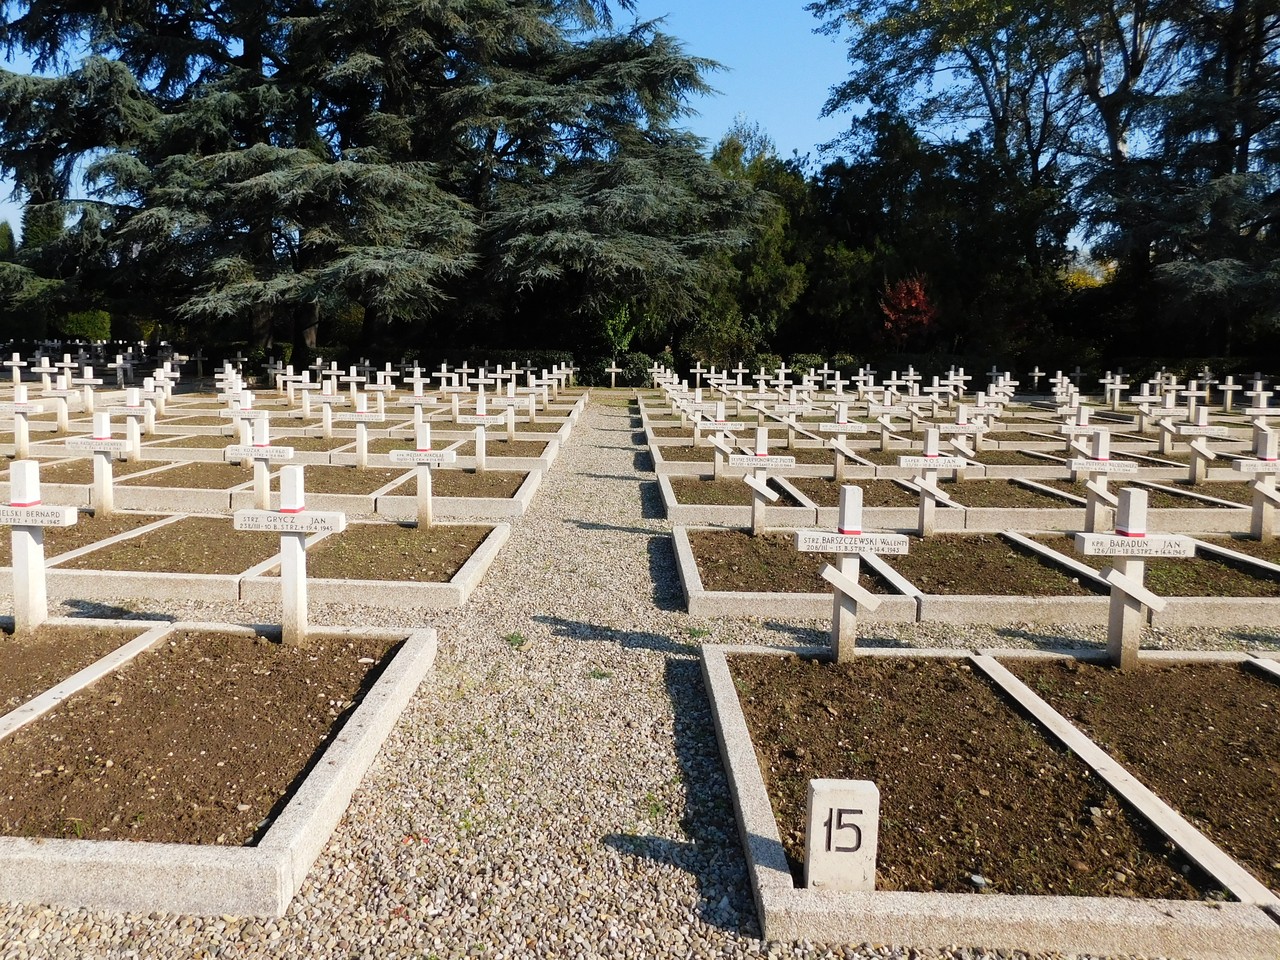 Polish War Cemetery Bologna